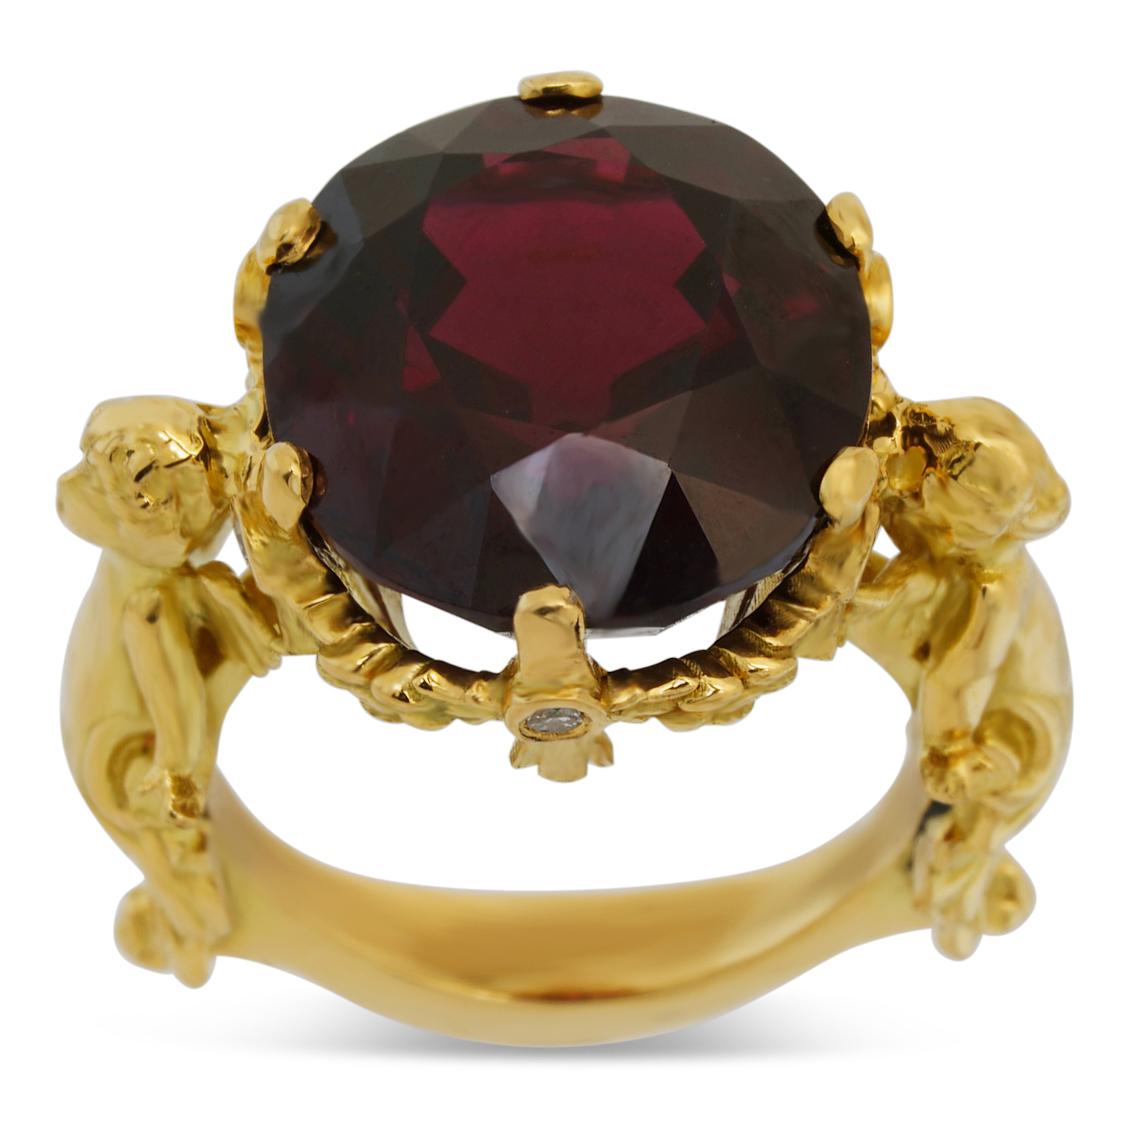 Oval Cut Amorini Ring in 18 Karat Yellow Gold with Garnet and White Diamonds